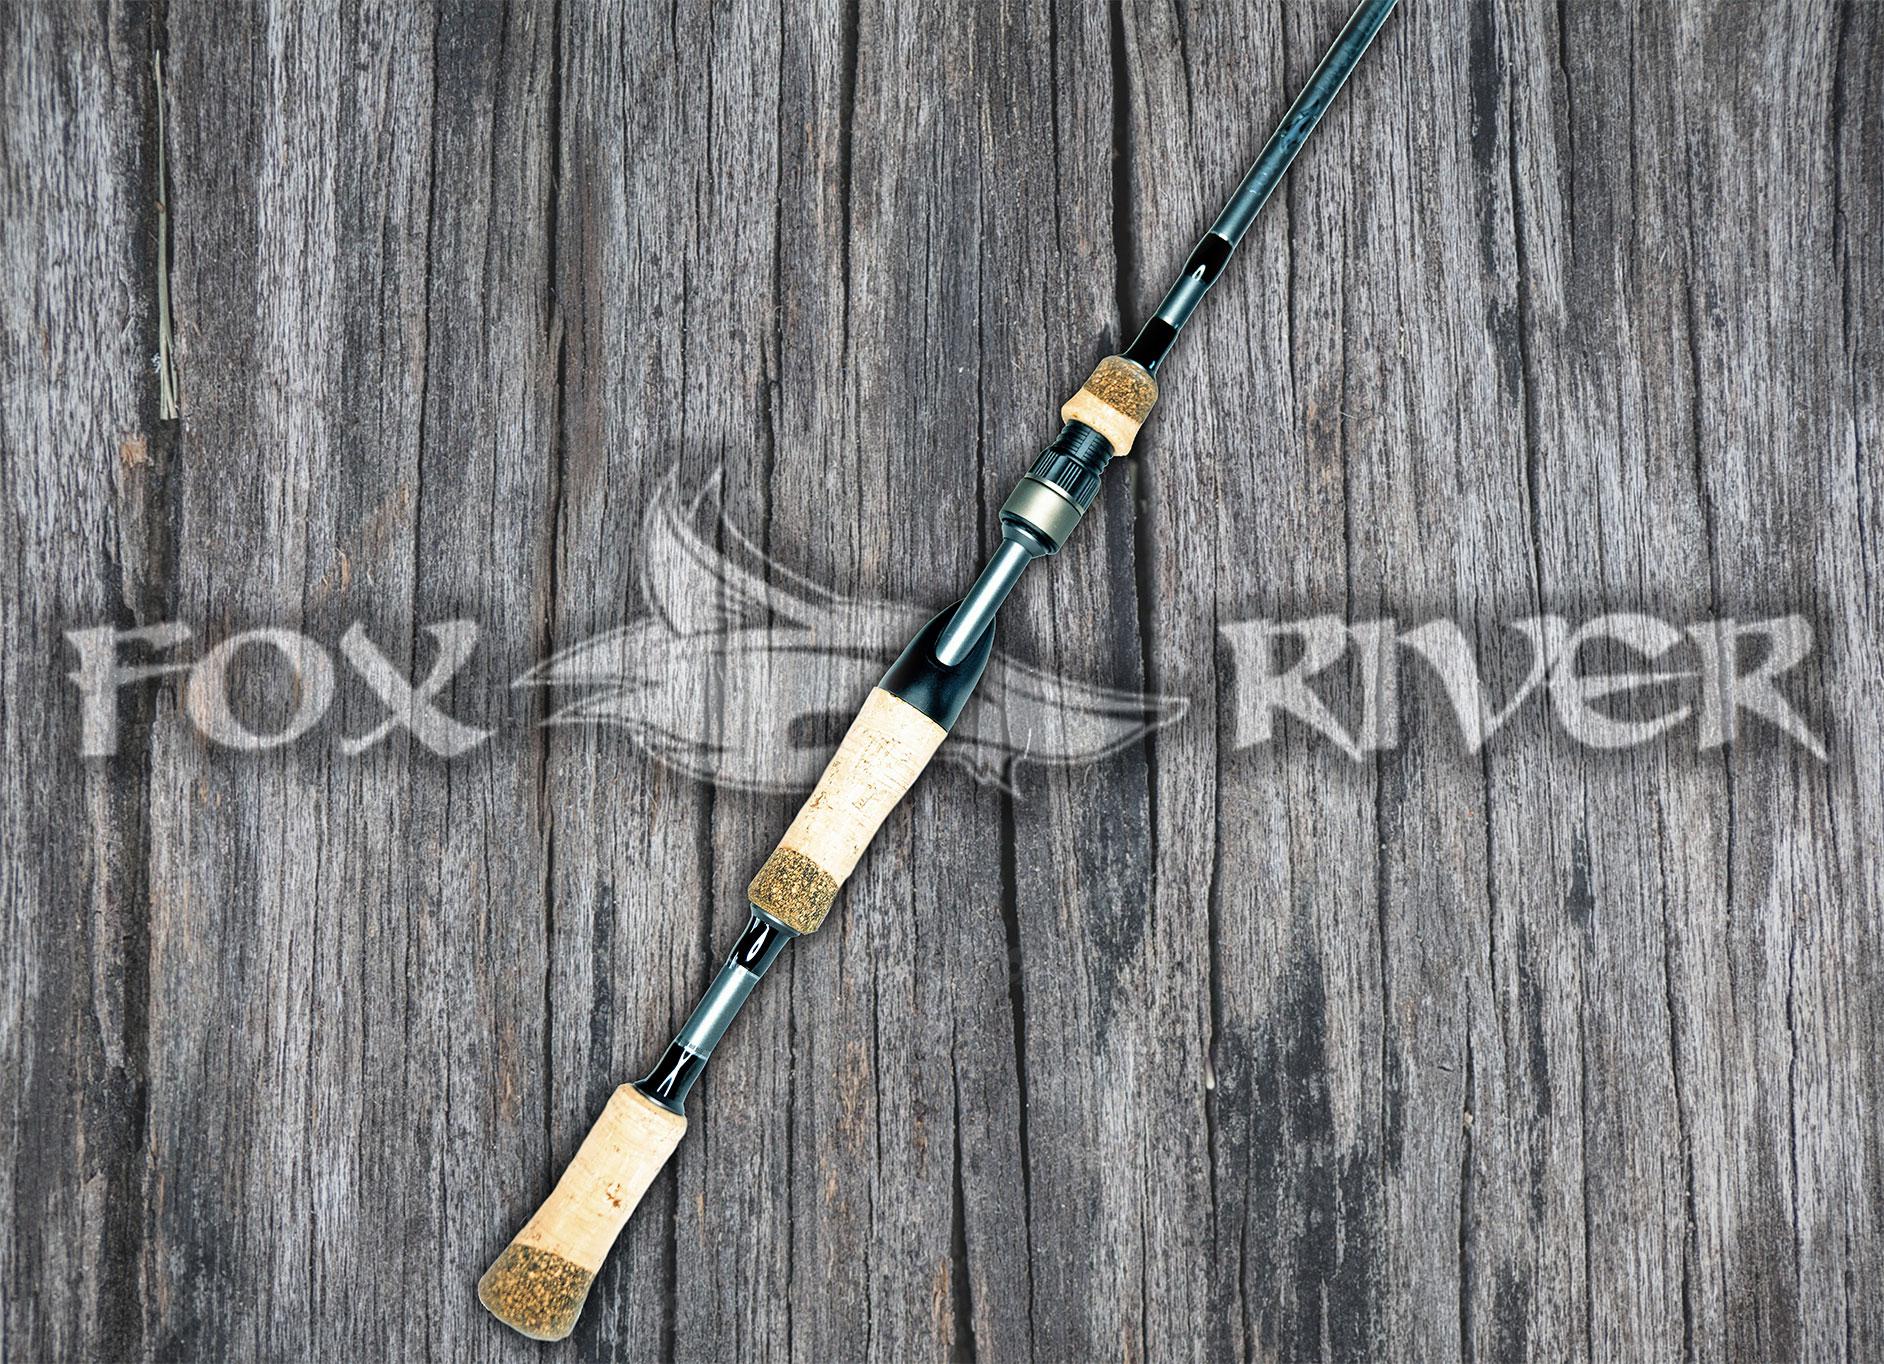 Fox River Lures and Rods - 7' 3 Medium Heavy Split-Grip Spinning Rod